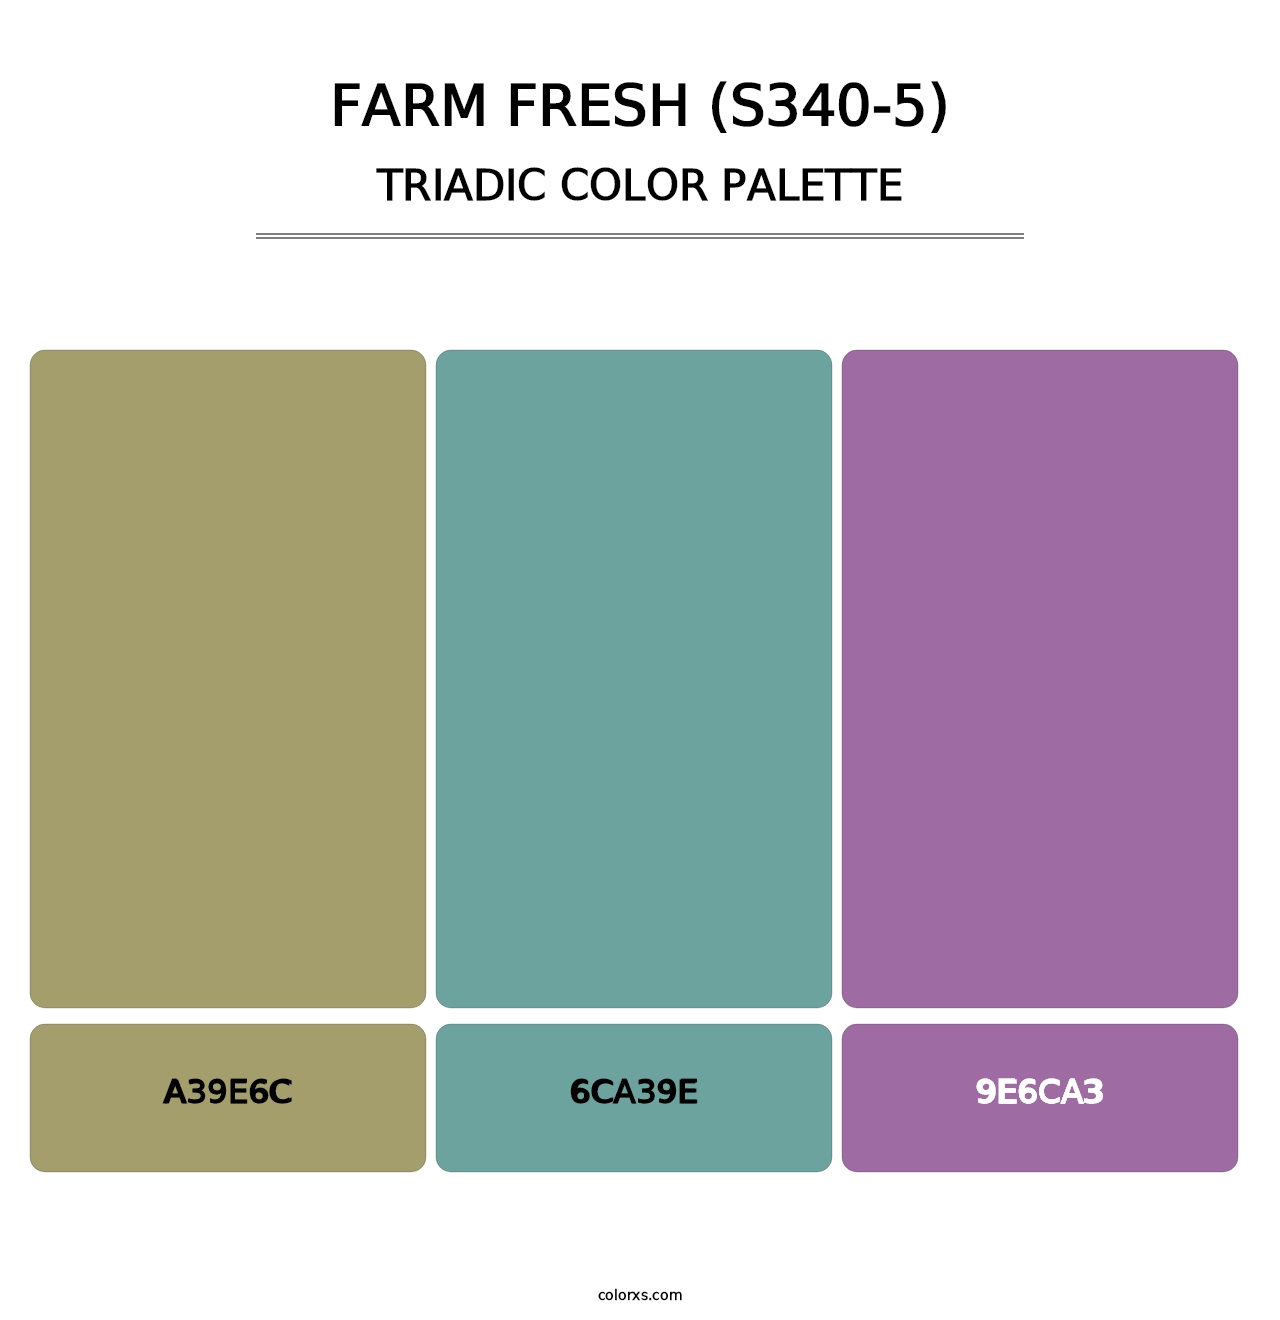 Farm Fresh (S340-5) - Triadic Color Palette